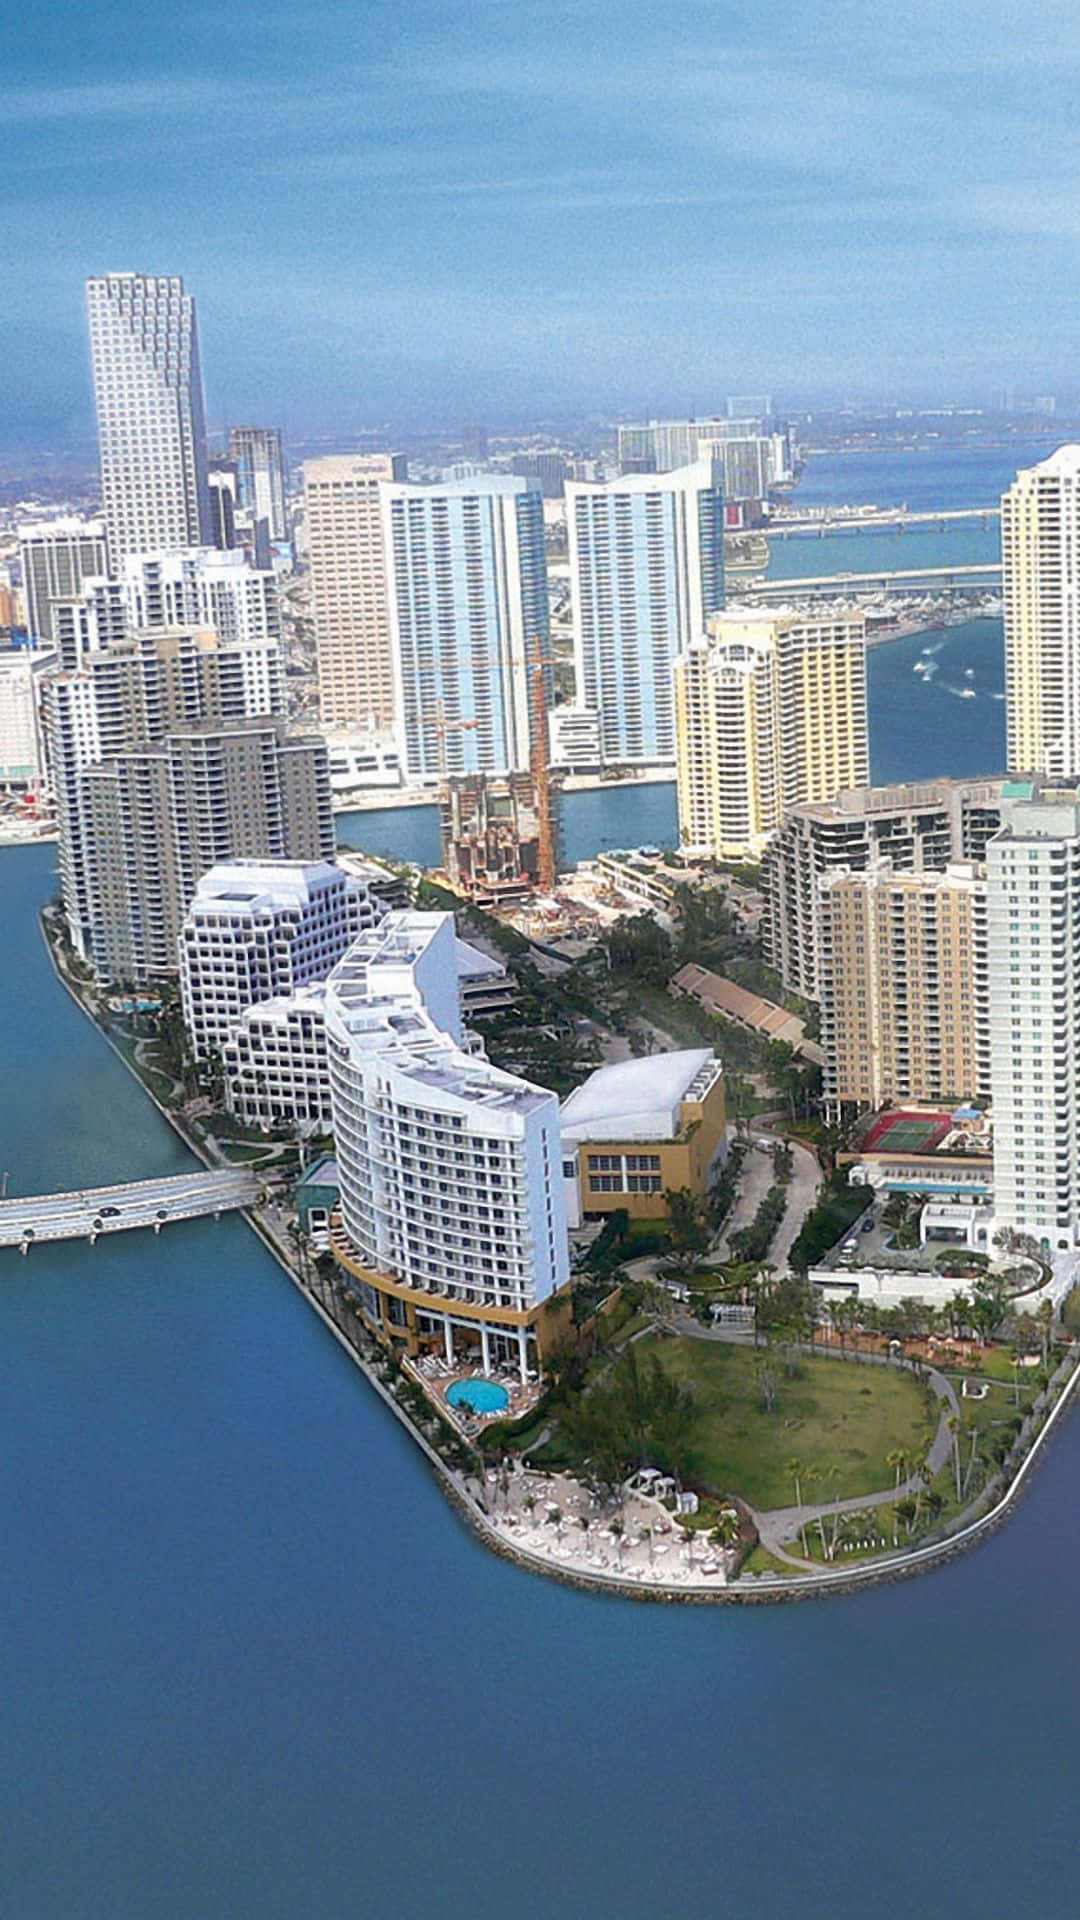 Miamibeach - Hotell I Miami Beach. Wallpaper